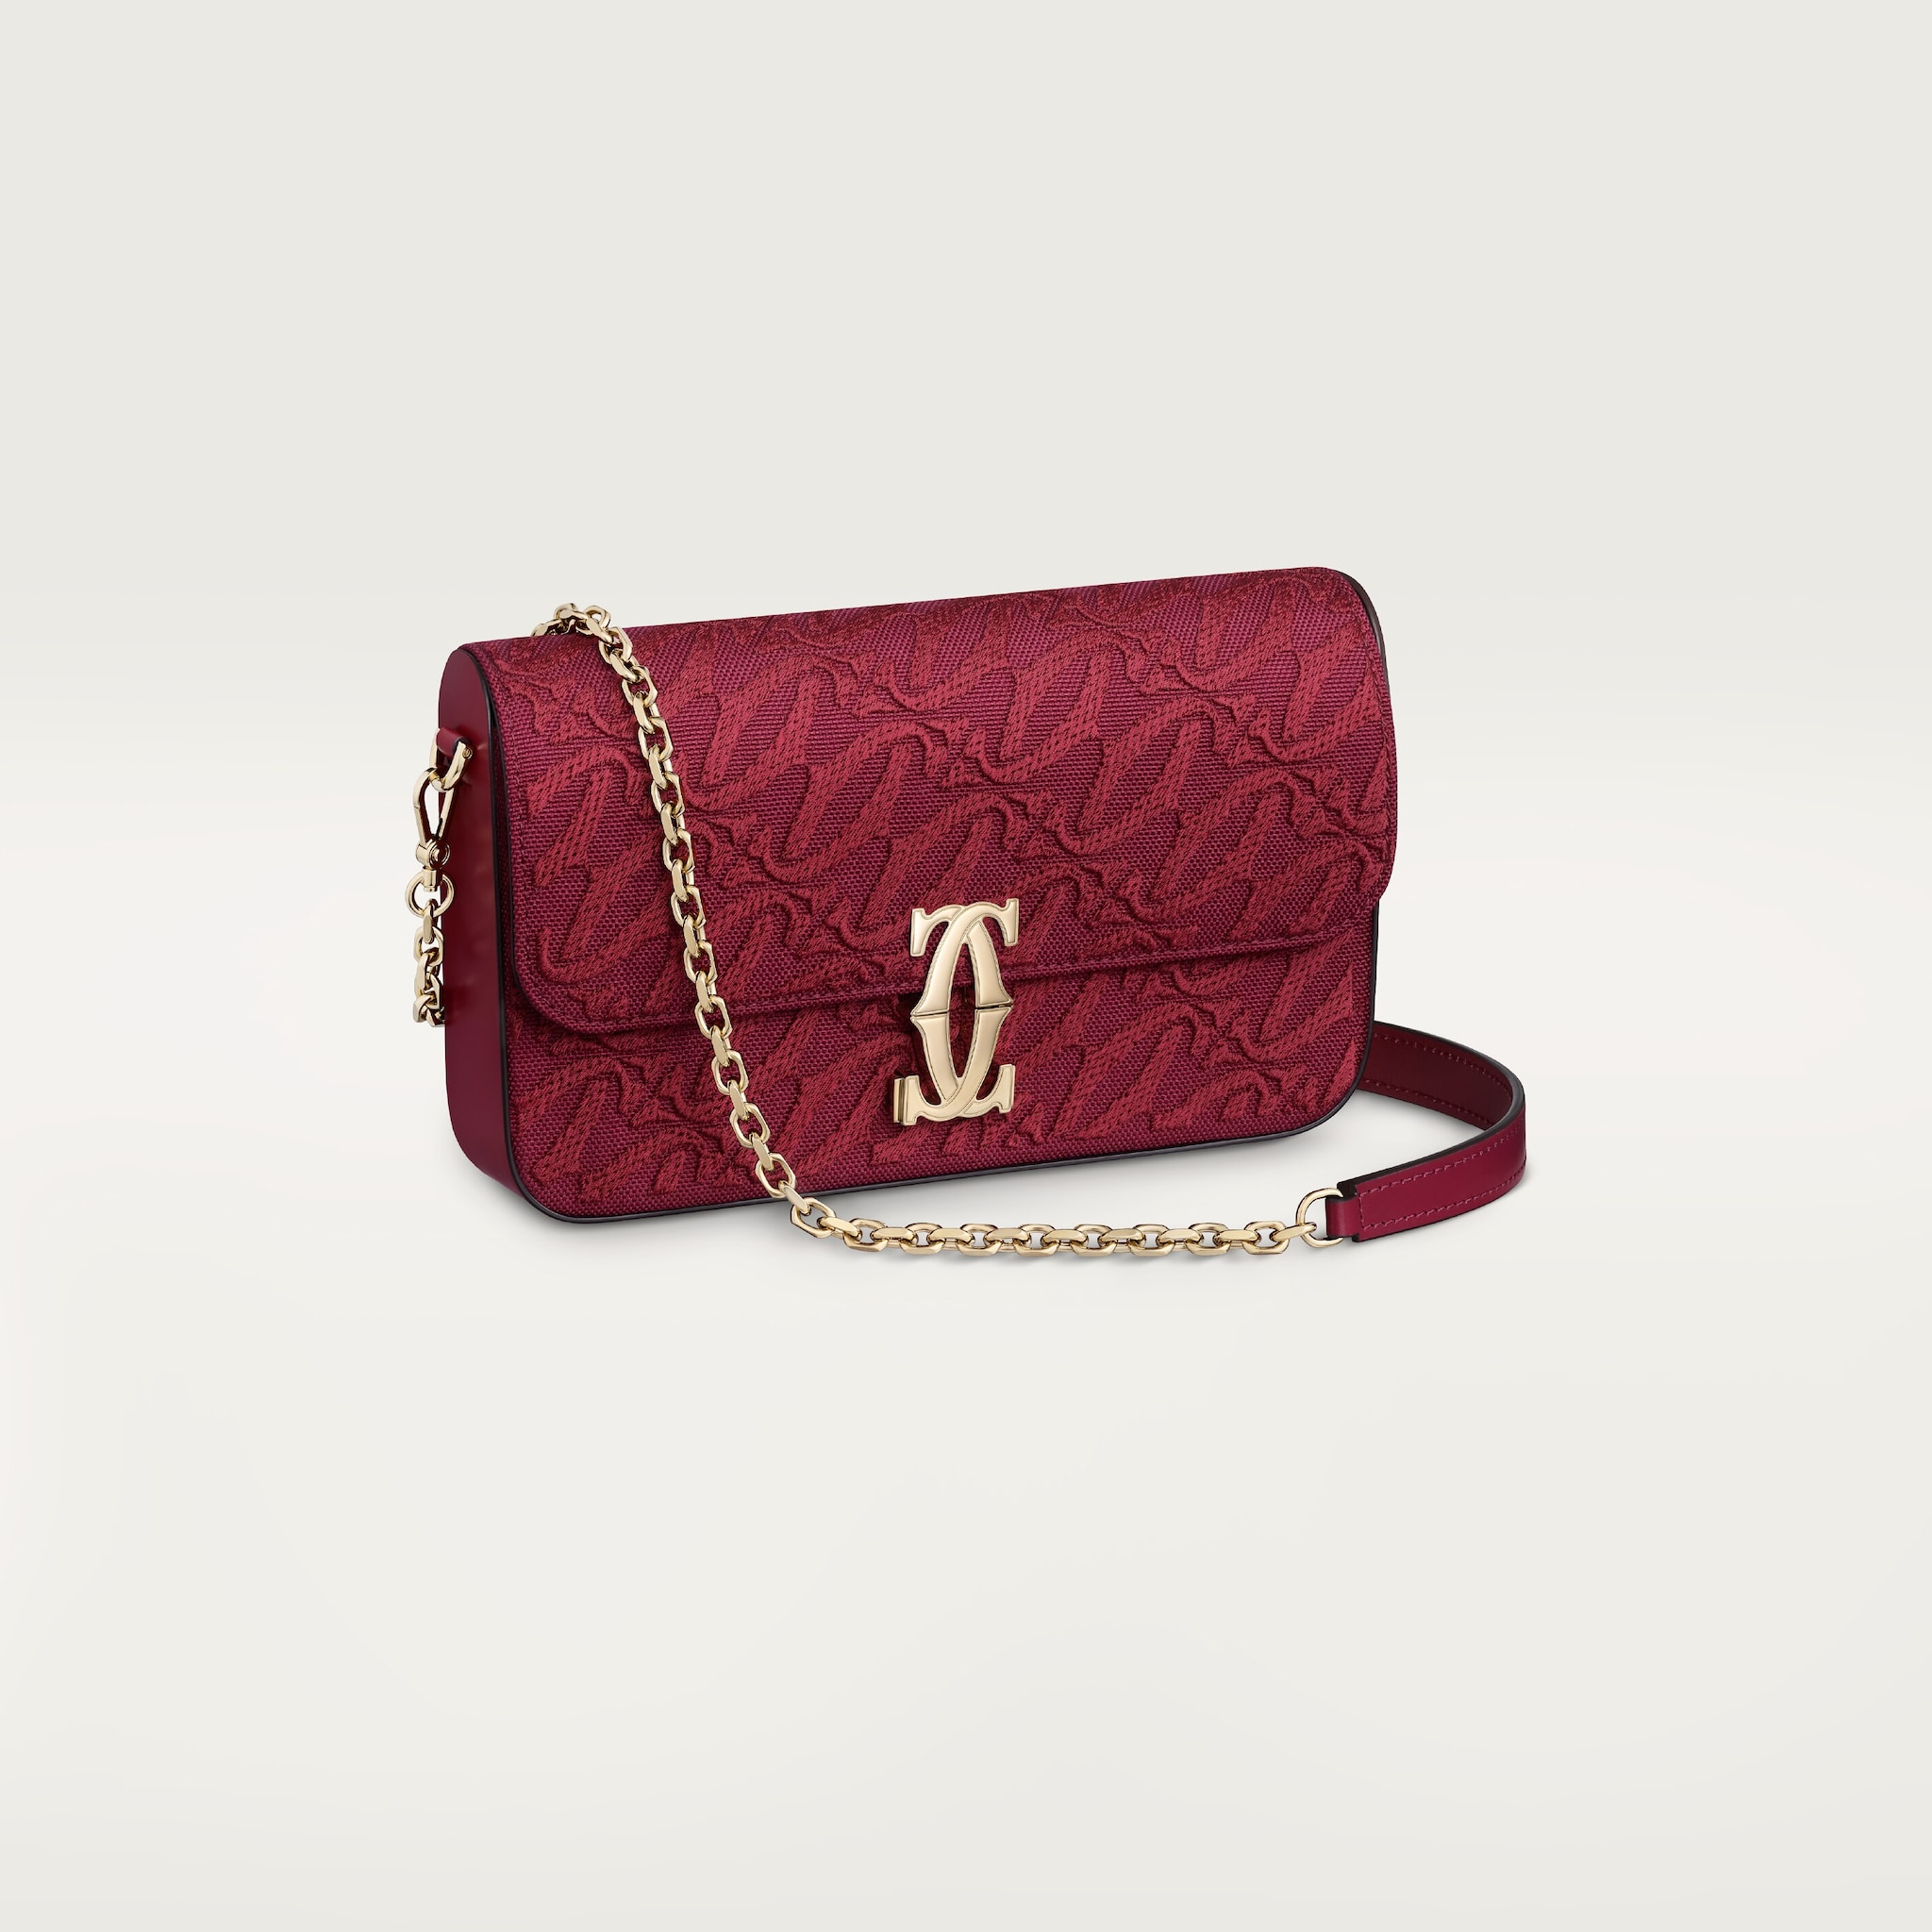 C de Cartier系列迷你款链条手袋刺绣和樱桃红色小牛皮，镀金饰面